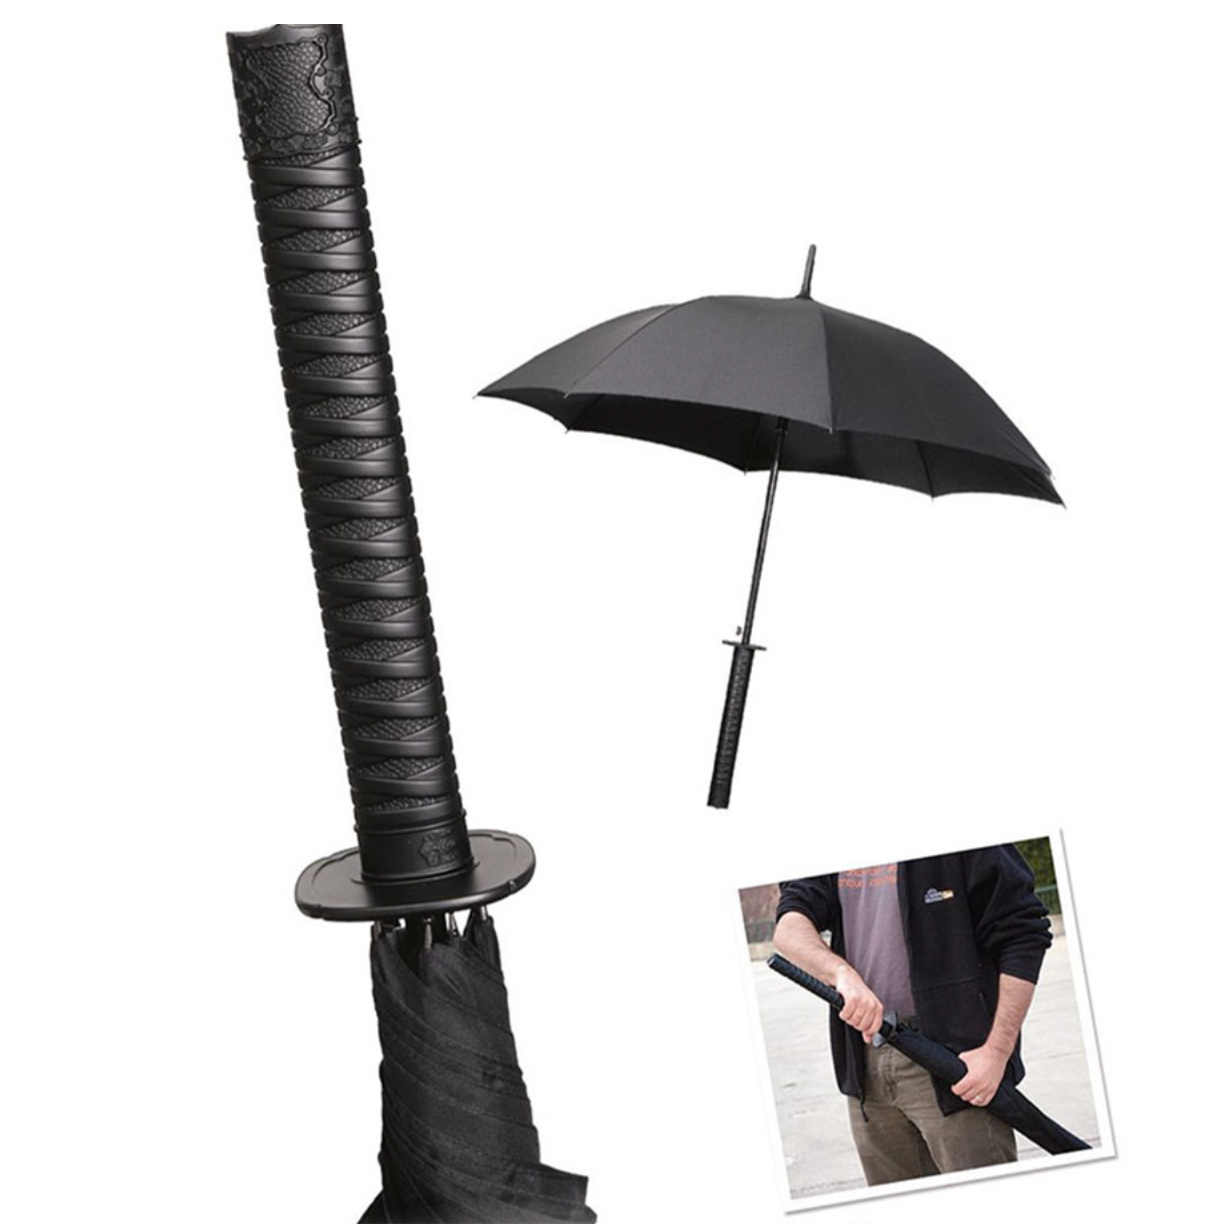 ninja sword umbrella